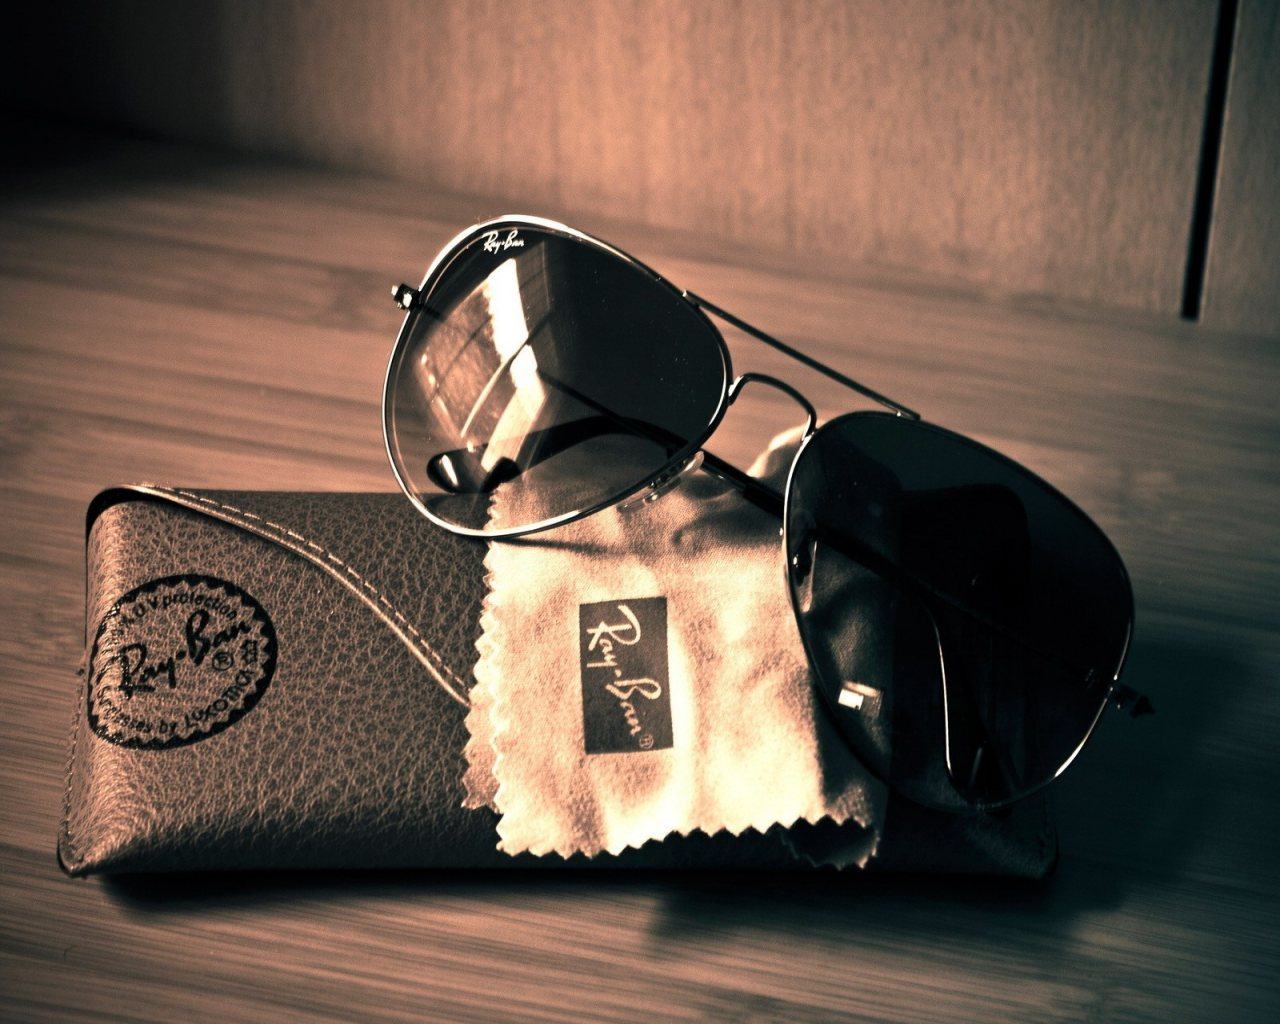 ray ban prescription sunglasses with logo uk